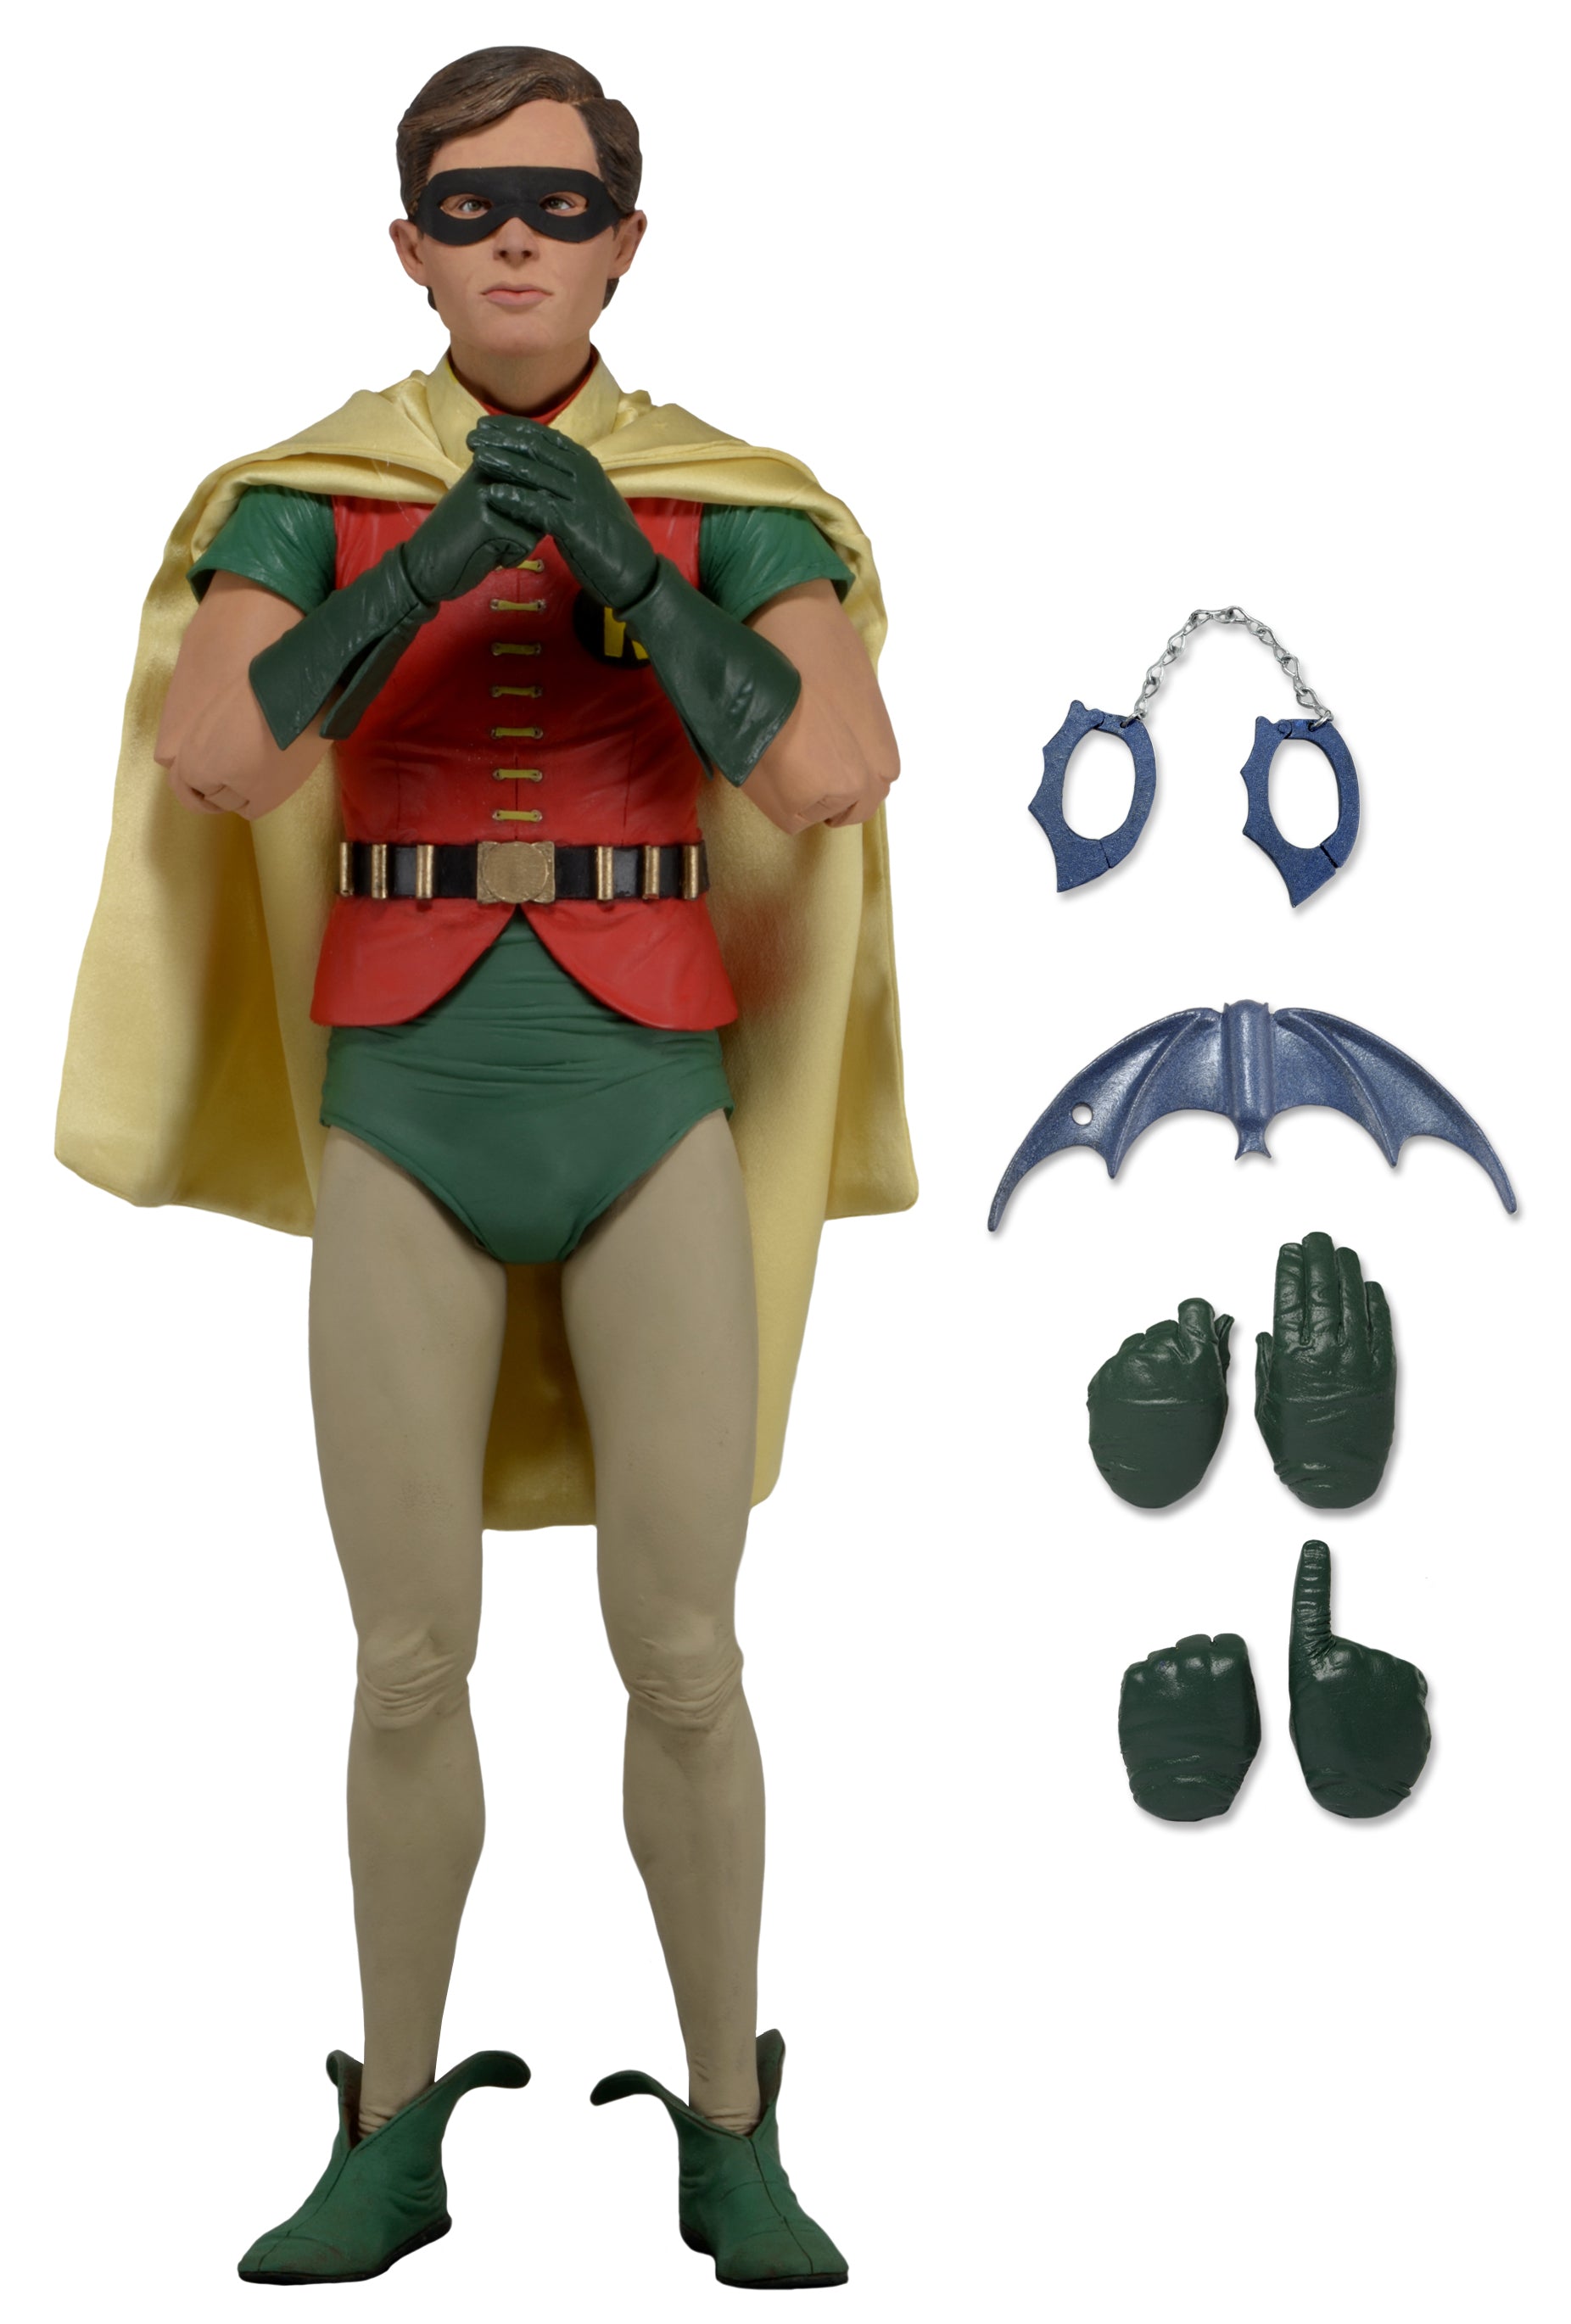 Neca Figura de Accion: Batman 1966 - Robin Escala 1/4